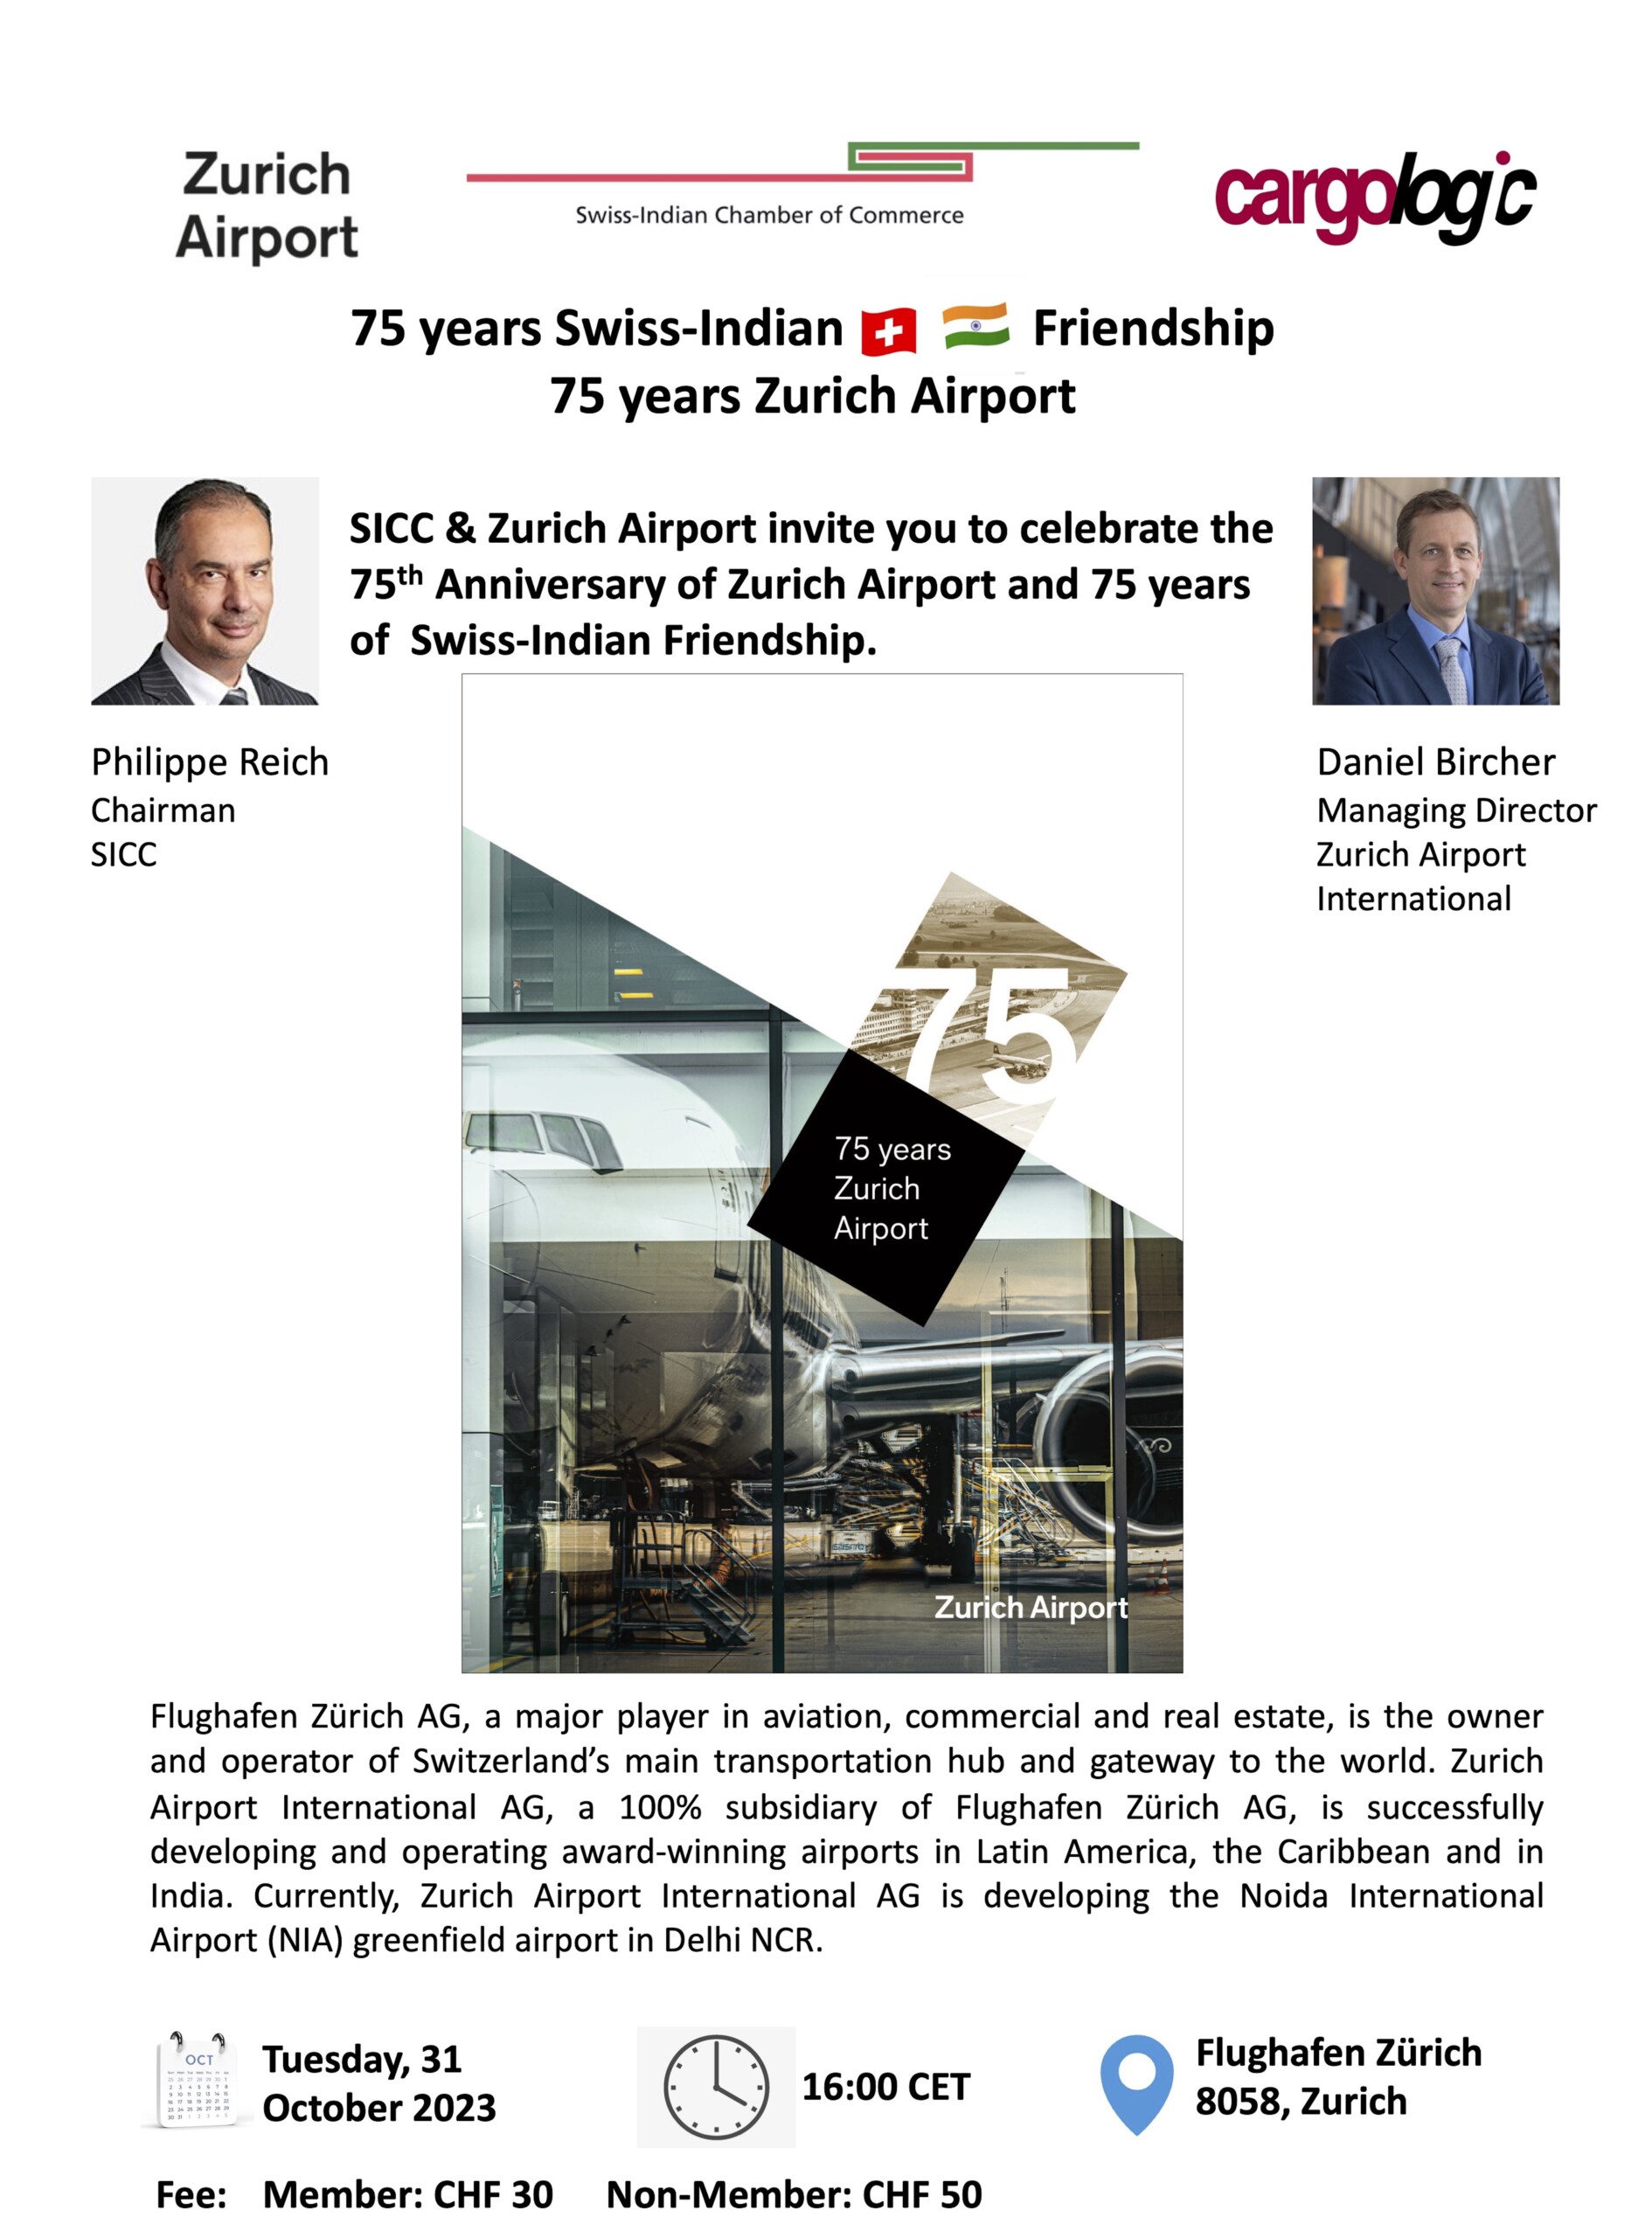 Event at Zurich Airport